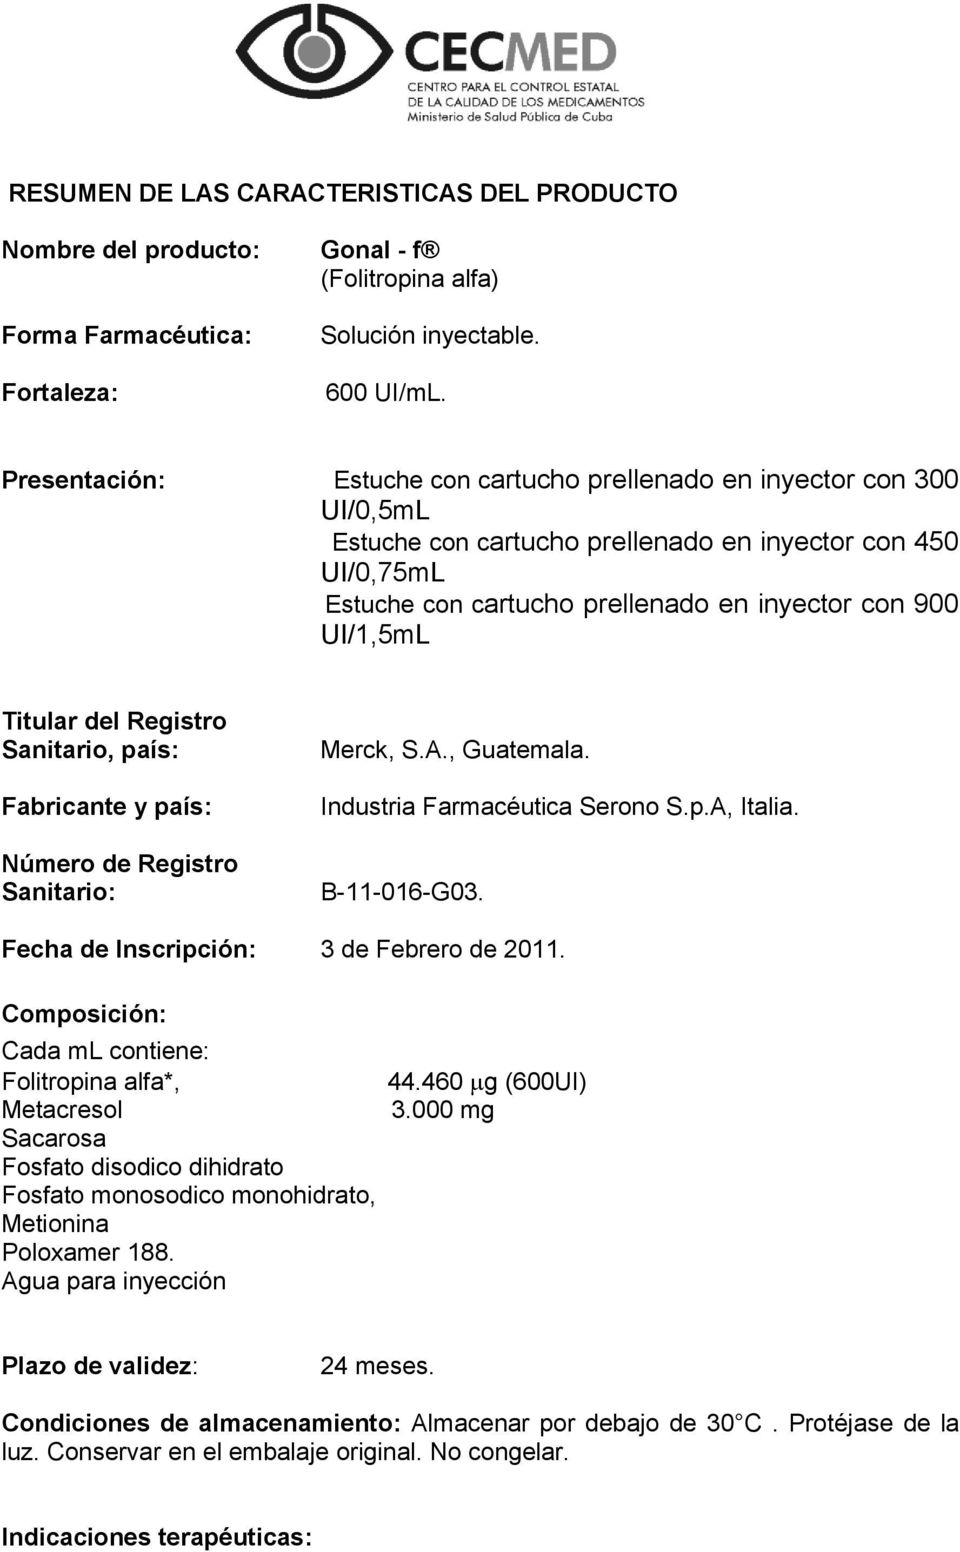 Titular del Registro Sanitario, país: Fabricante y país: Número de Registro Sanitario: Merck, S.A., Guatemala. Industria Farmacéutica Serono S.p.A, Italia. B-11-016-G03.